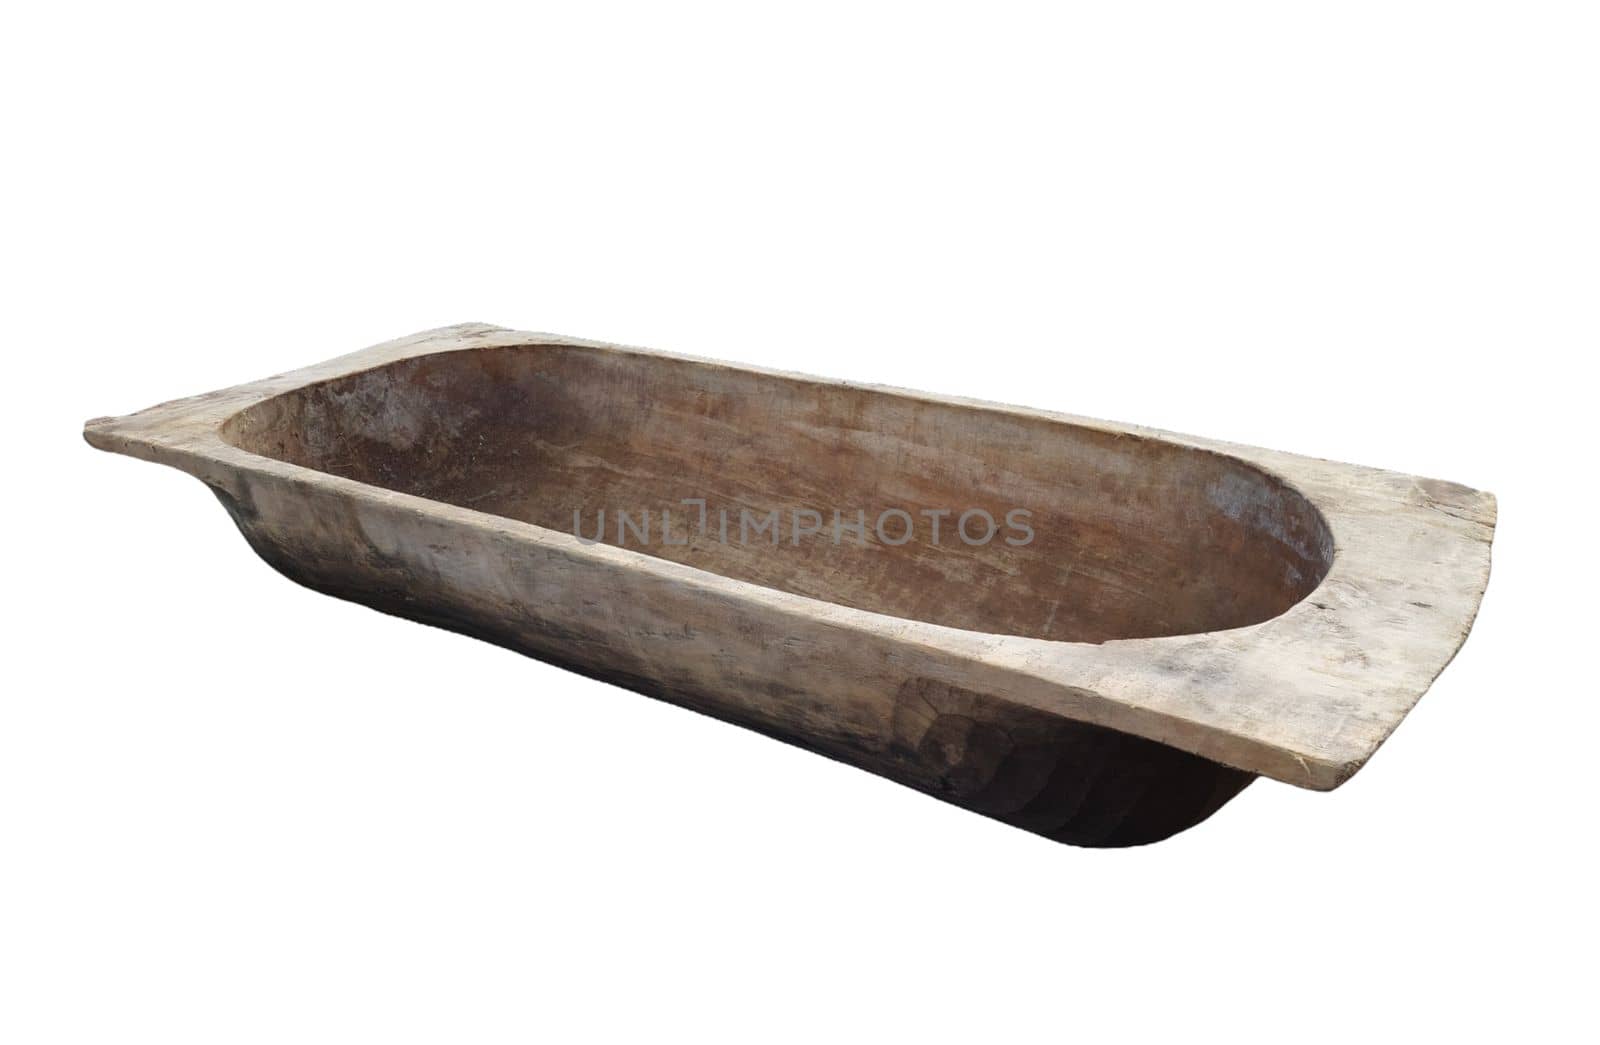 Carved wooden tub, wash tub or bread kneader. by gallofoto